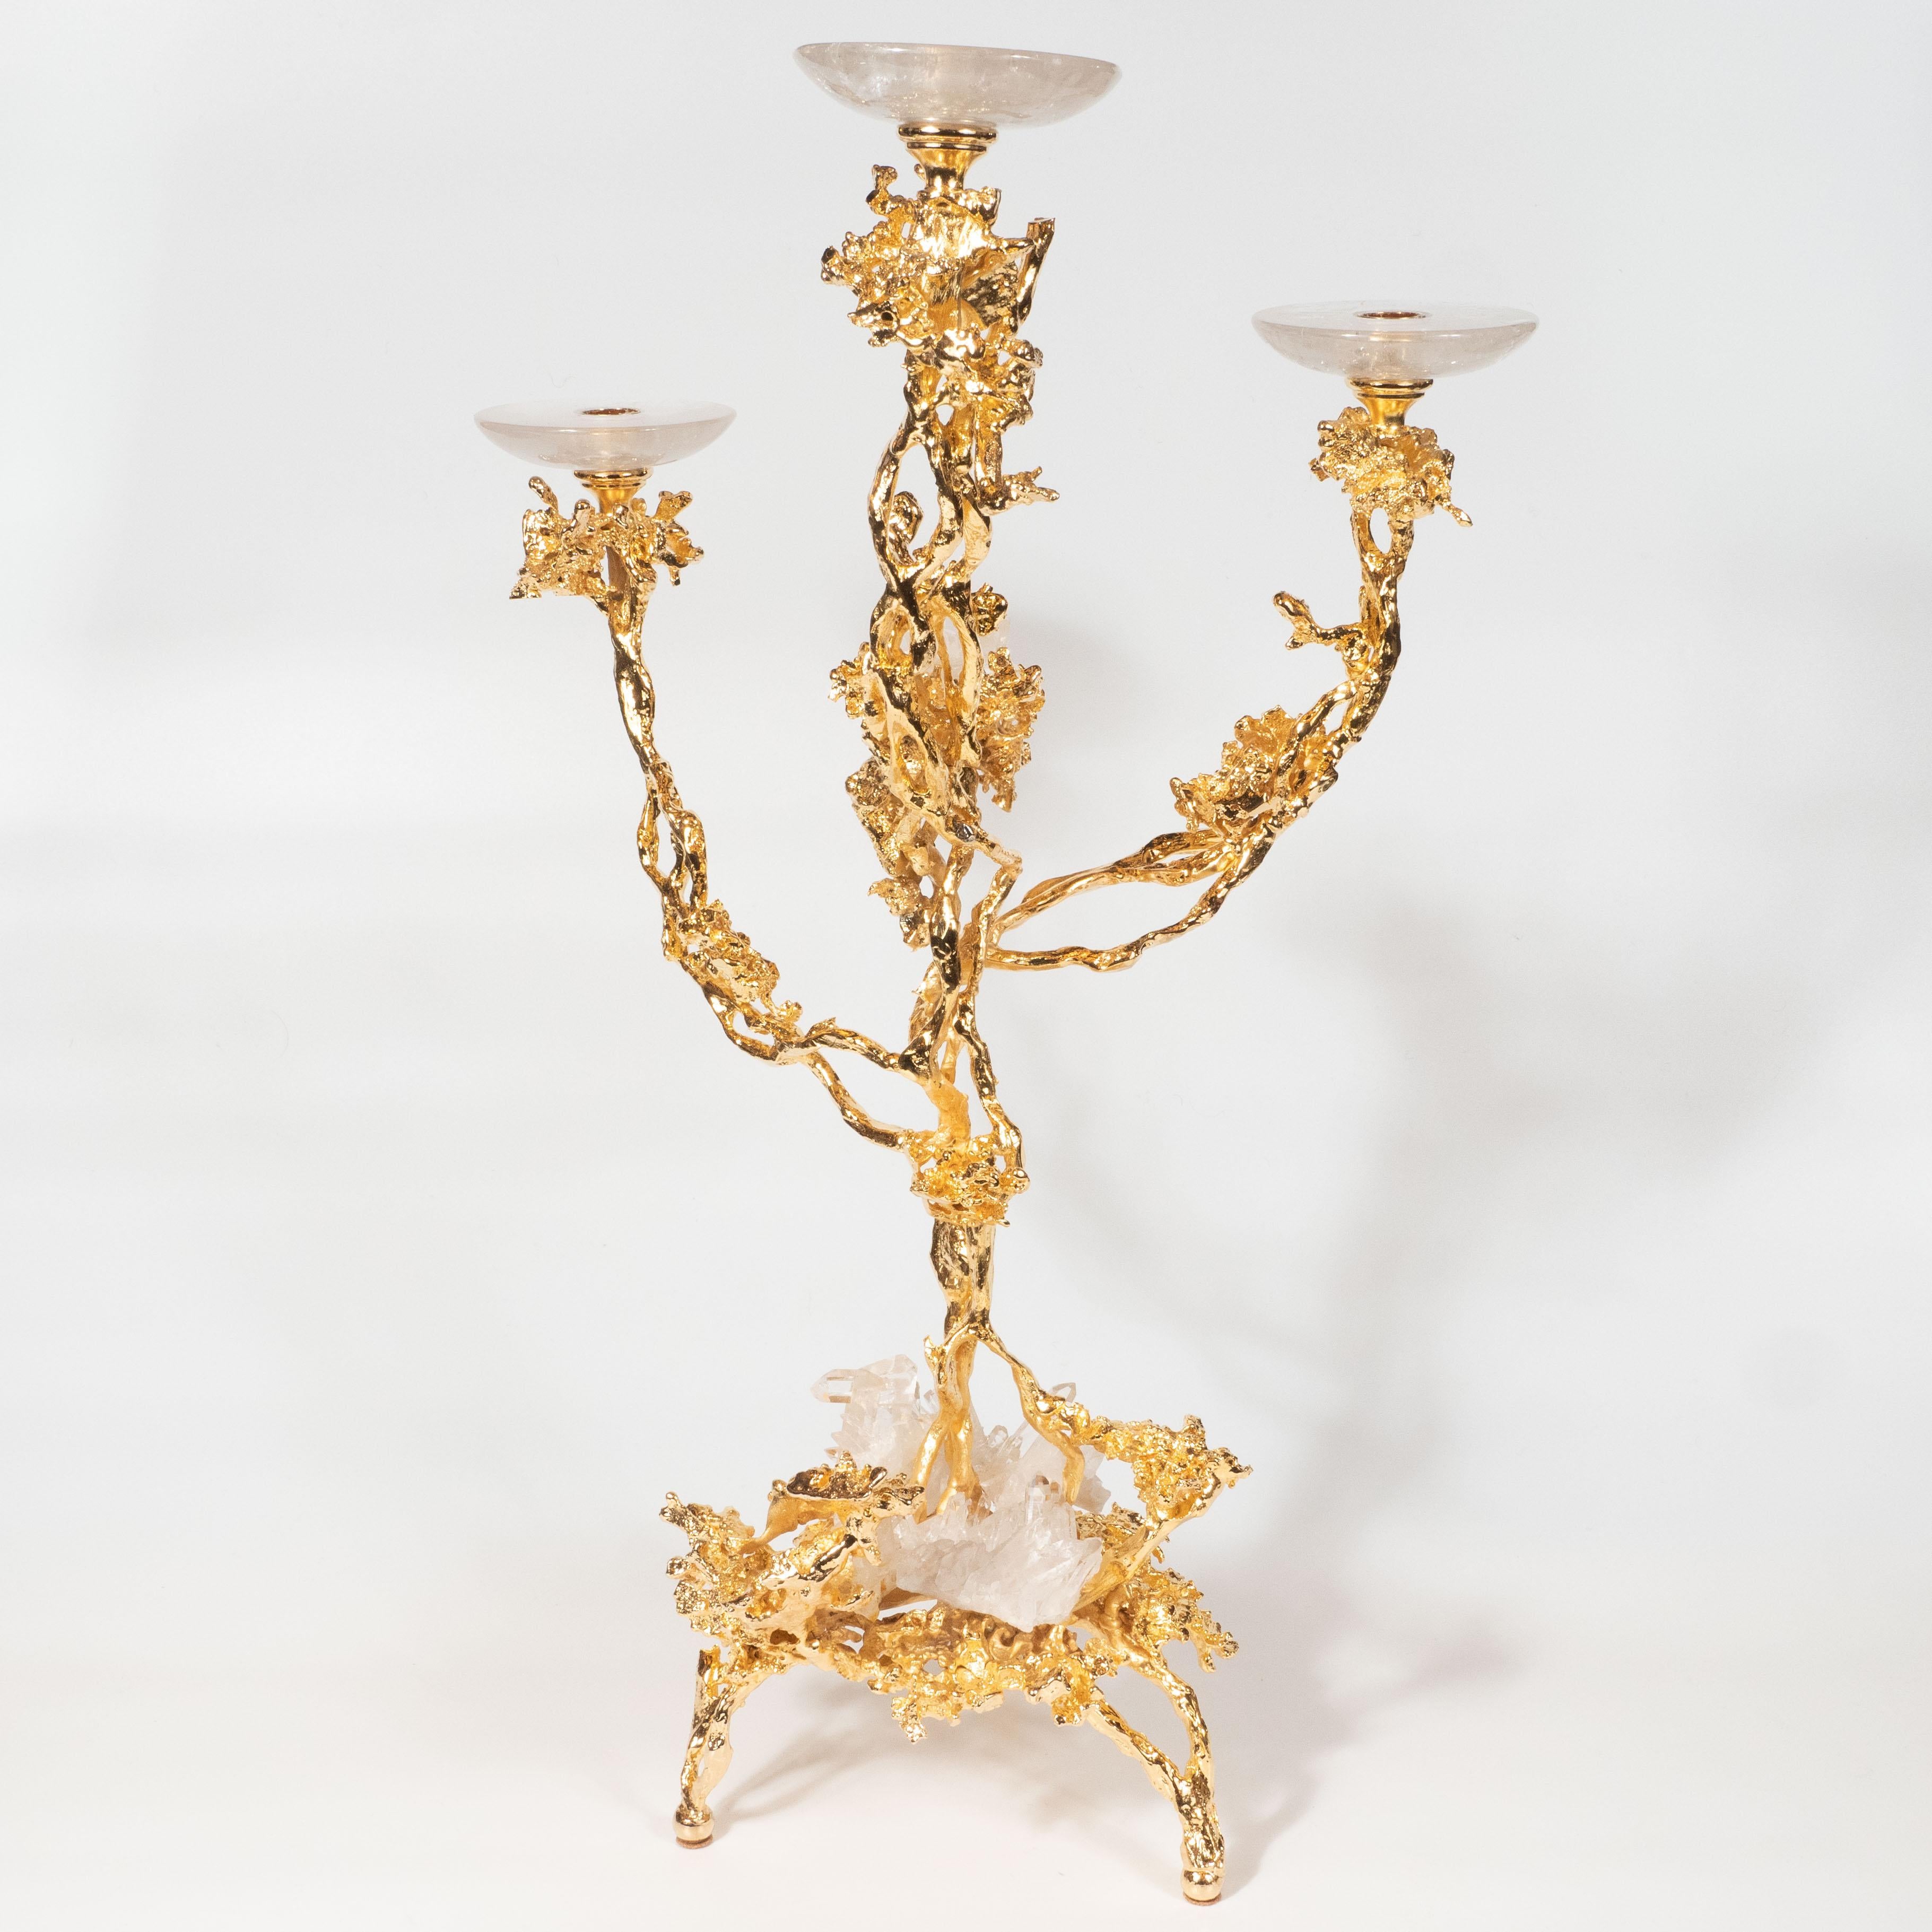 24-Karat Gold Triple Branch Candlesticks with Rock Crystals, Claude Boeltz, Pair For Sale 9